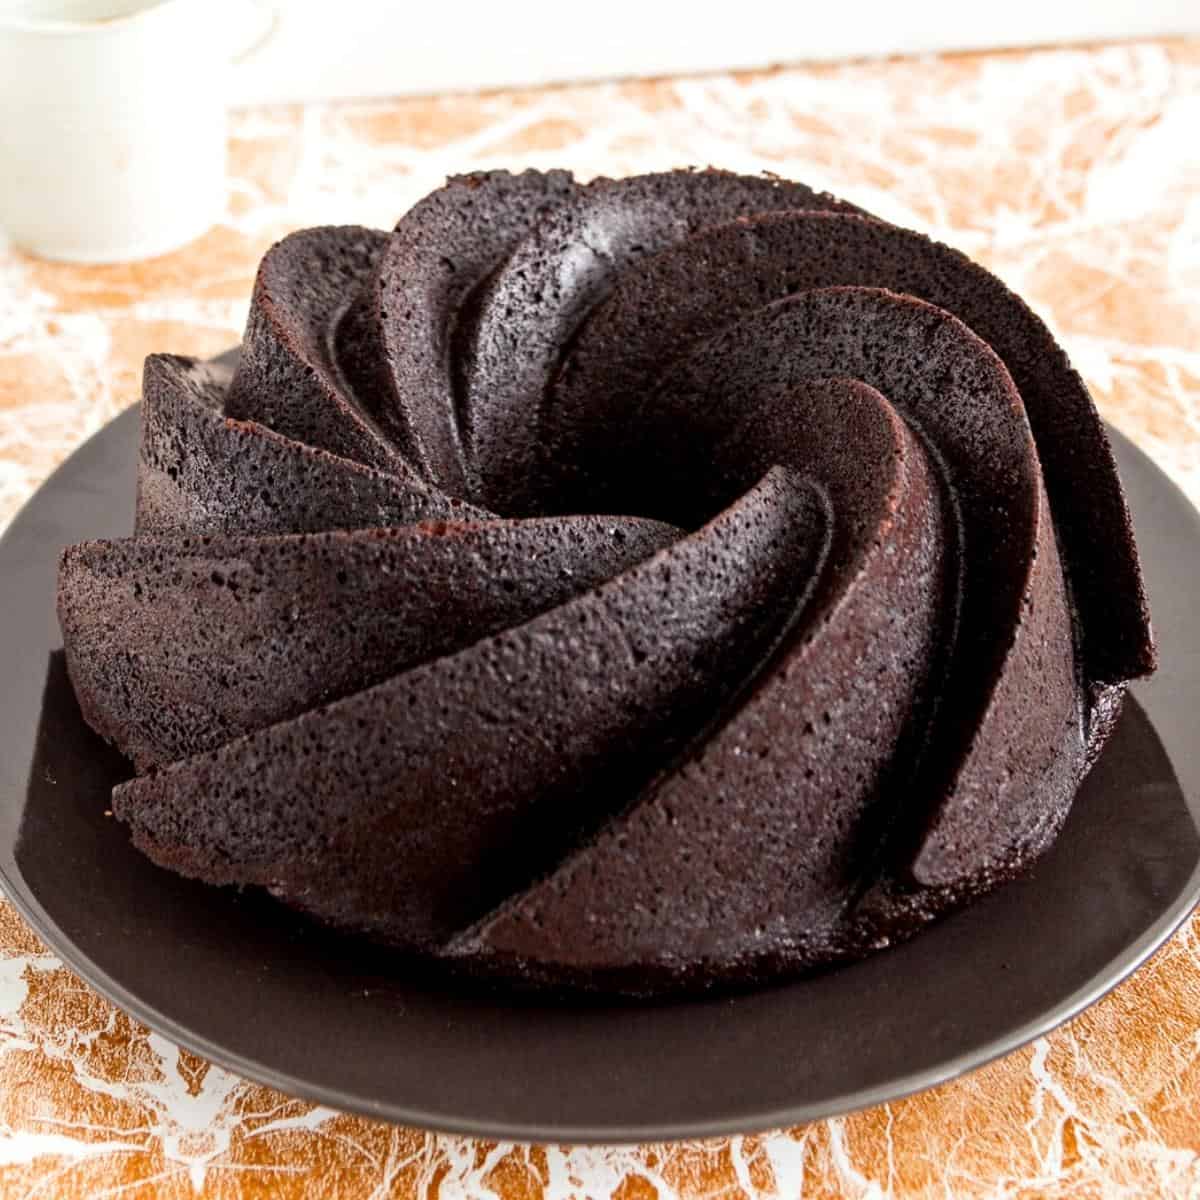 A unglazed chocolate cake.